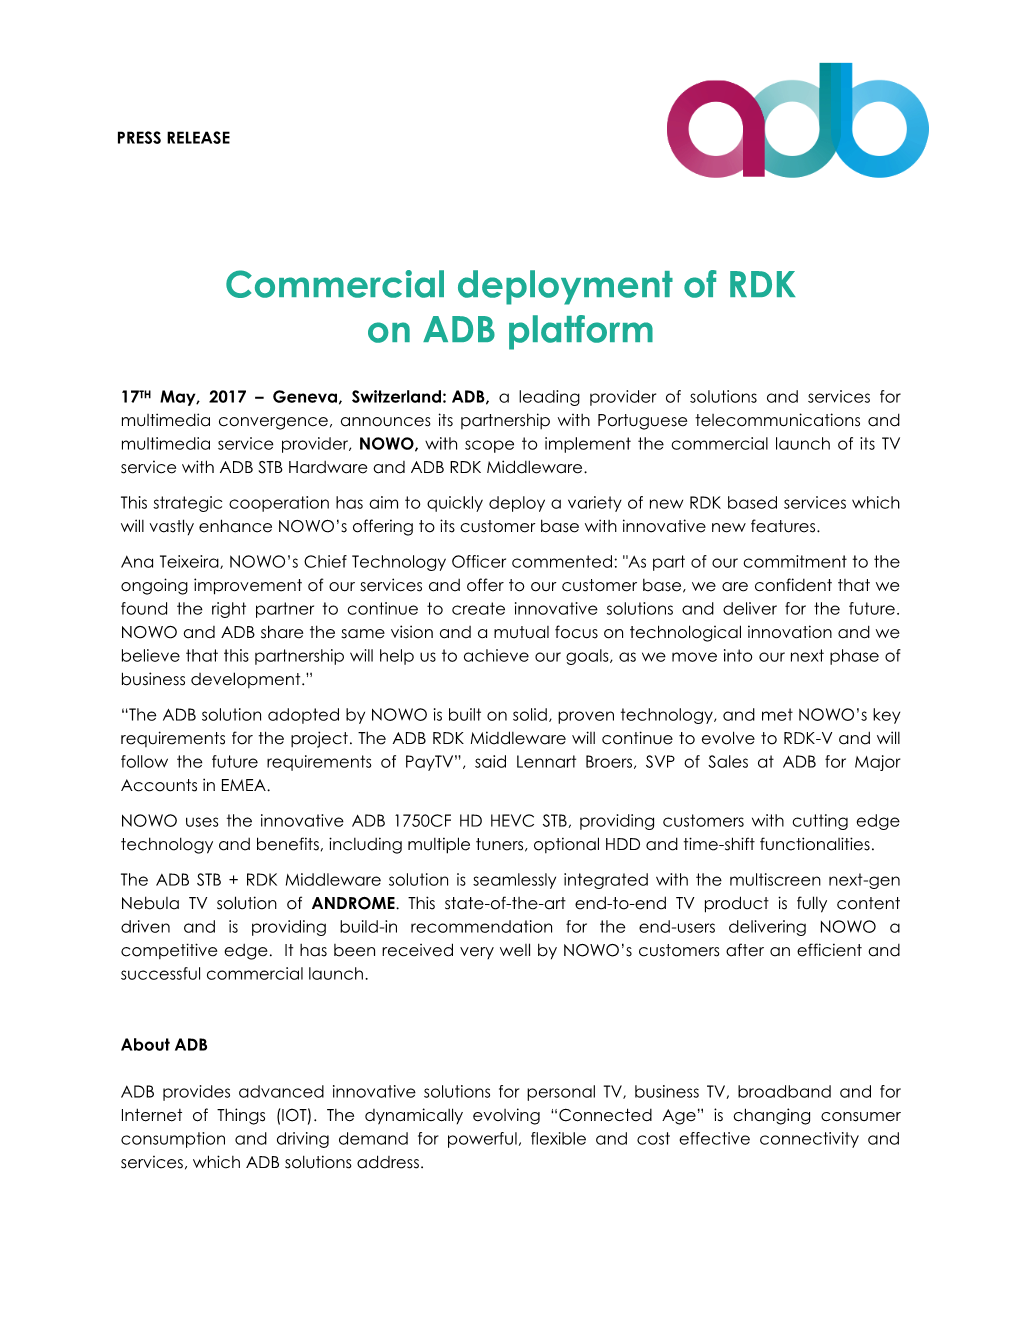 Commercial Deployment of RDK on ADB Platform